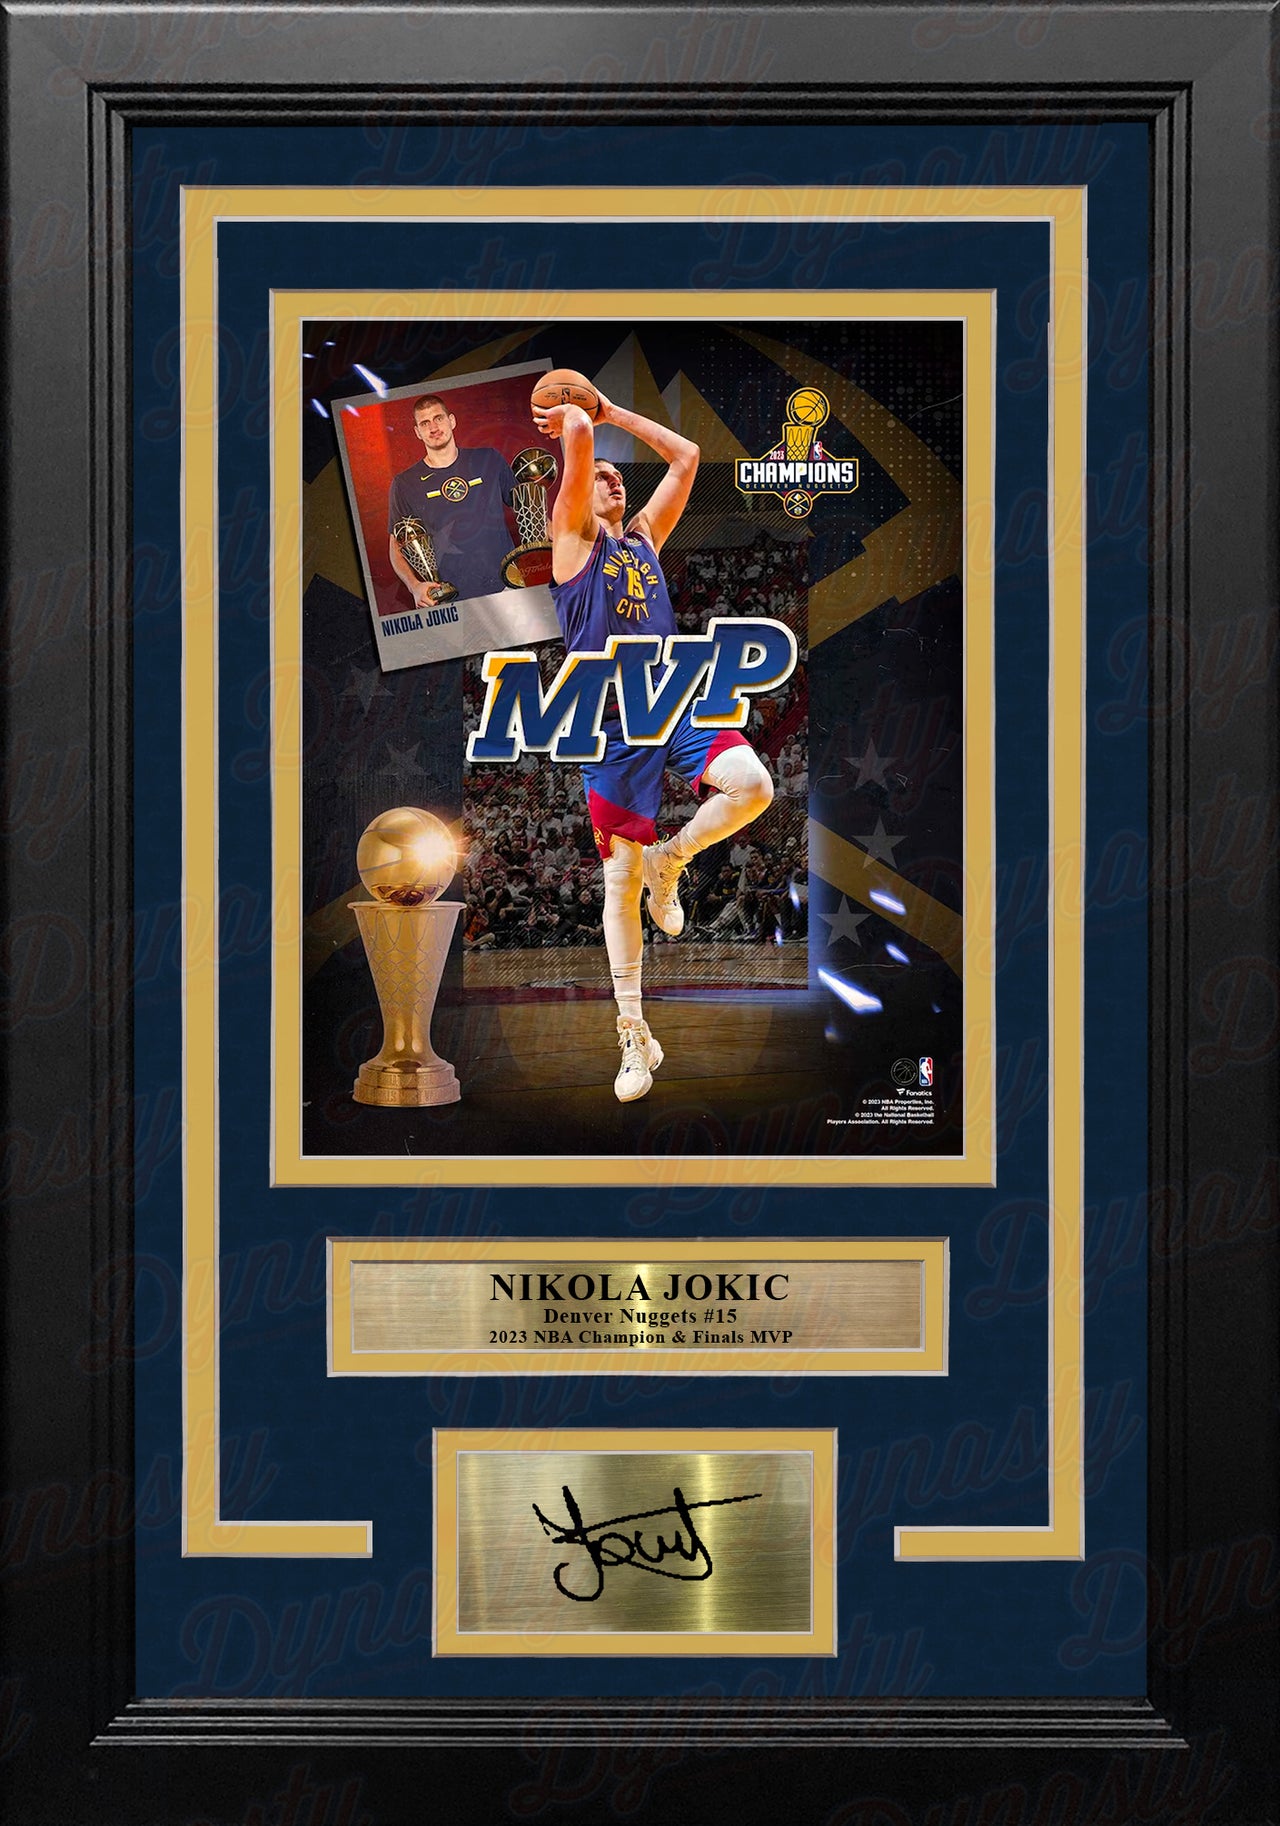 Nikola Jokic 15 NBA Finals MVP Season 2023 Navy Baseball Jersey